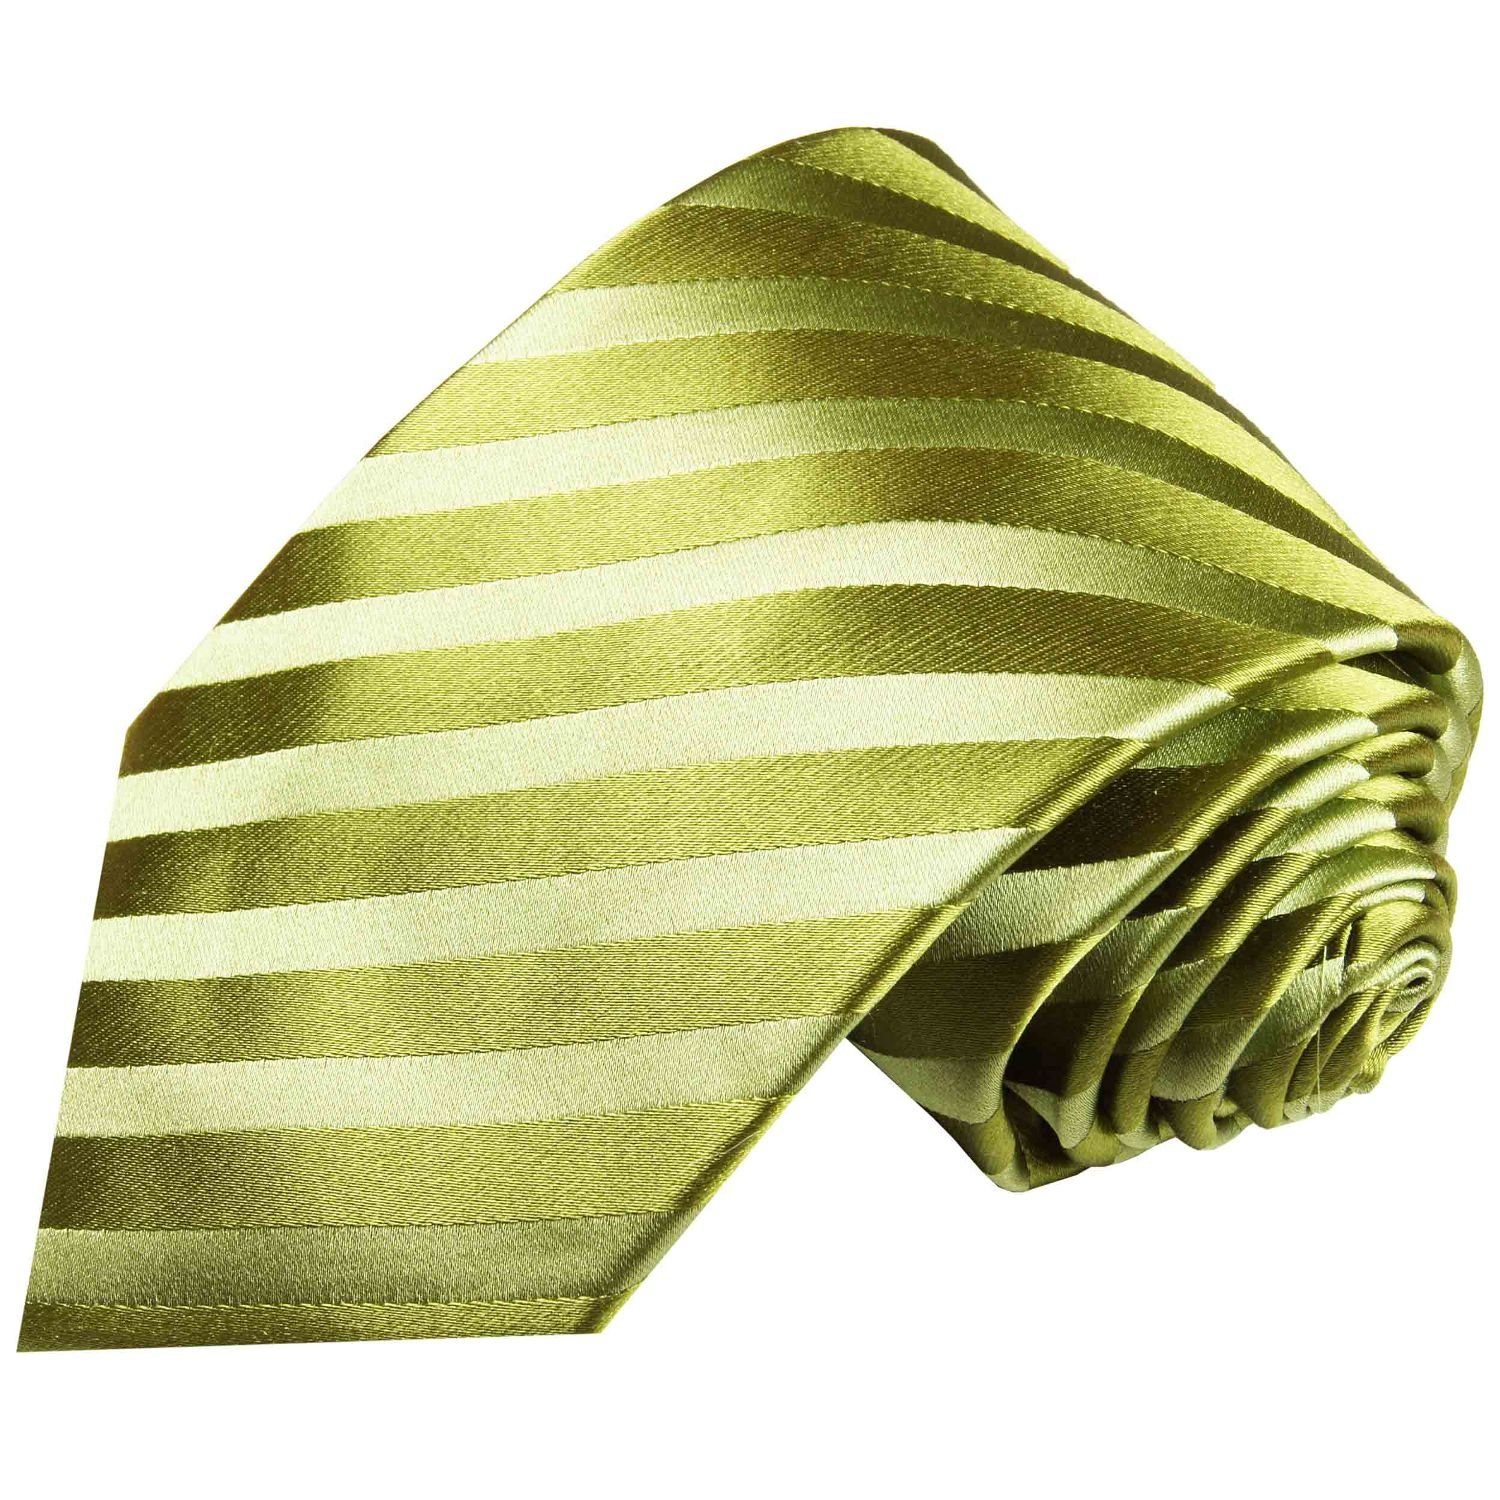 Paul Malone Krawatte Moderne Herren Seidenkrawatte gestreift 100% Seide Schmal (6cm), grün 984